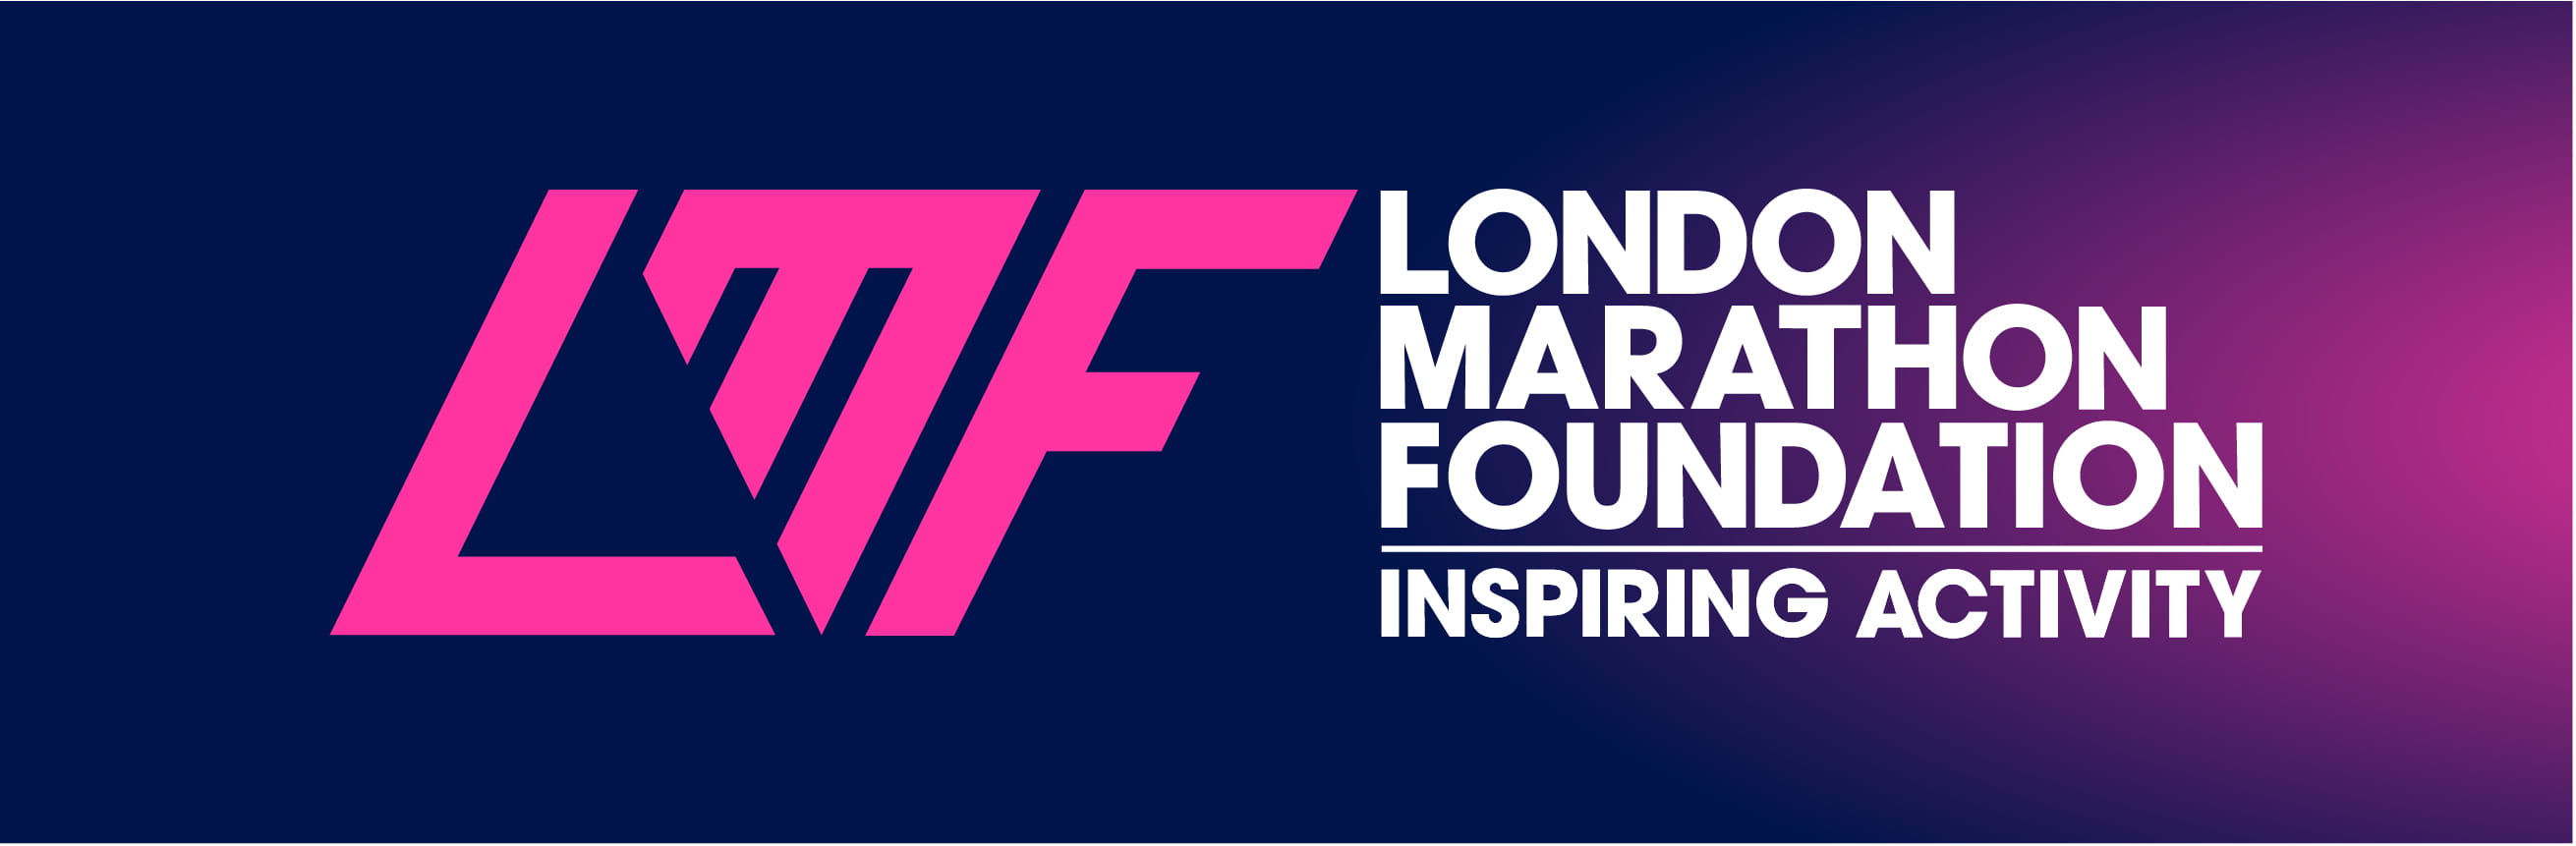 London Marathon Foundation logo